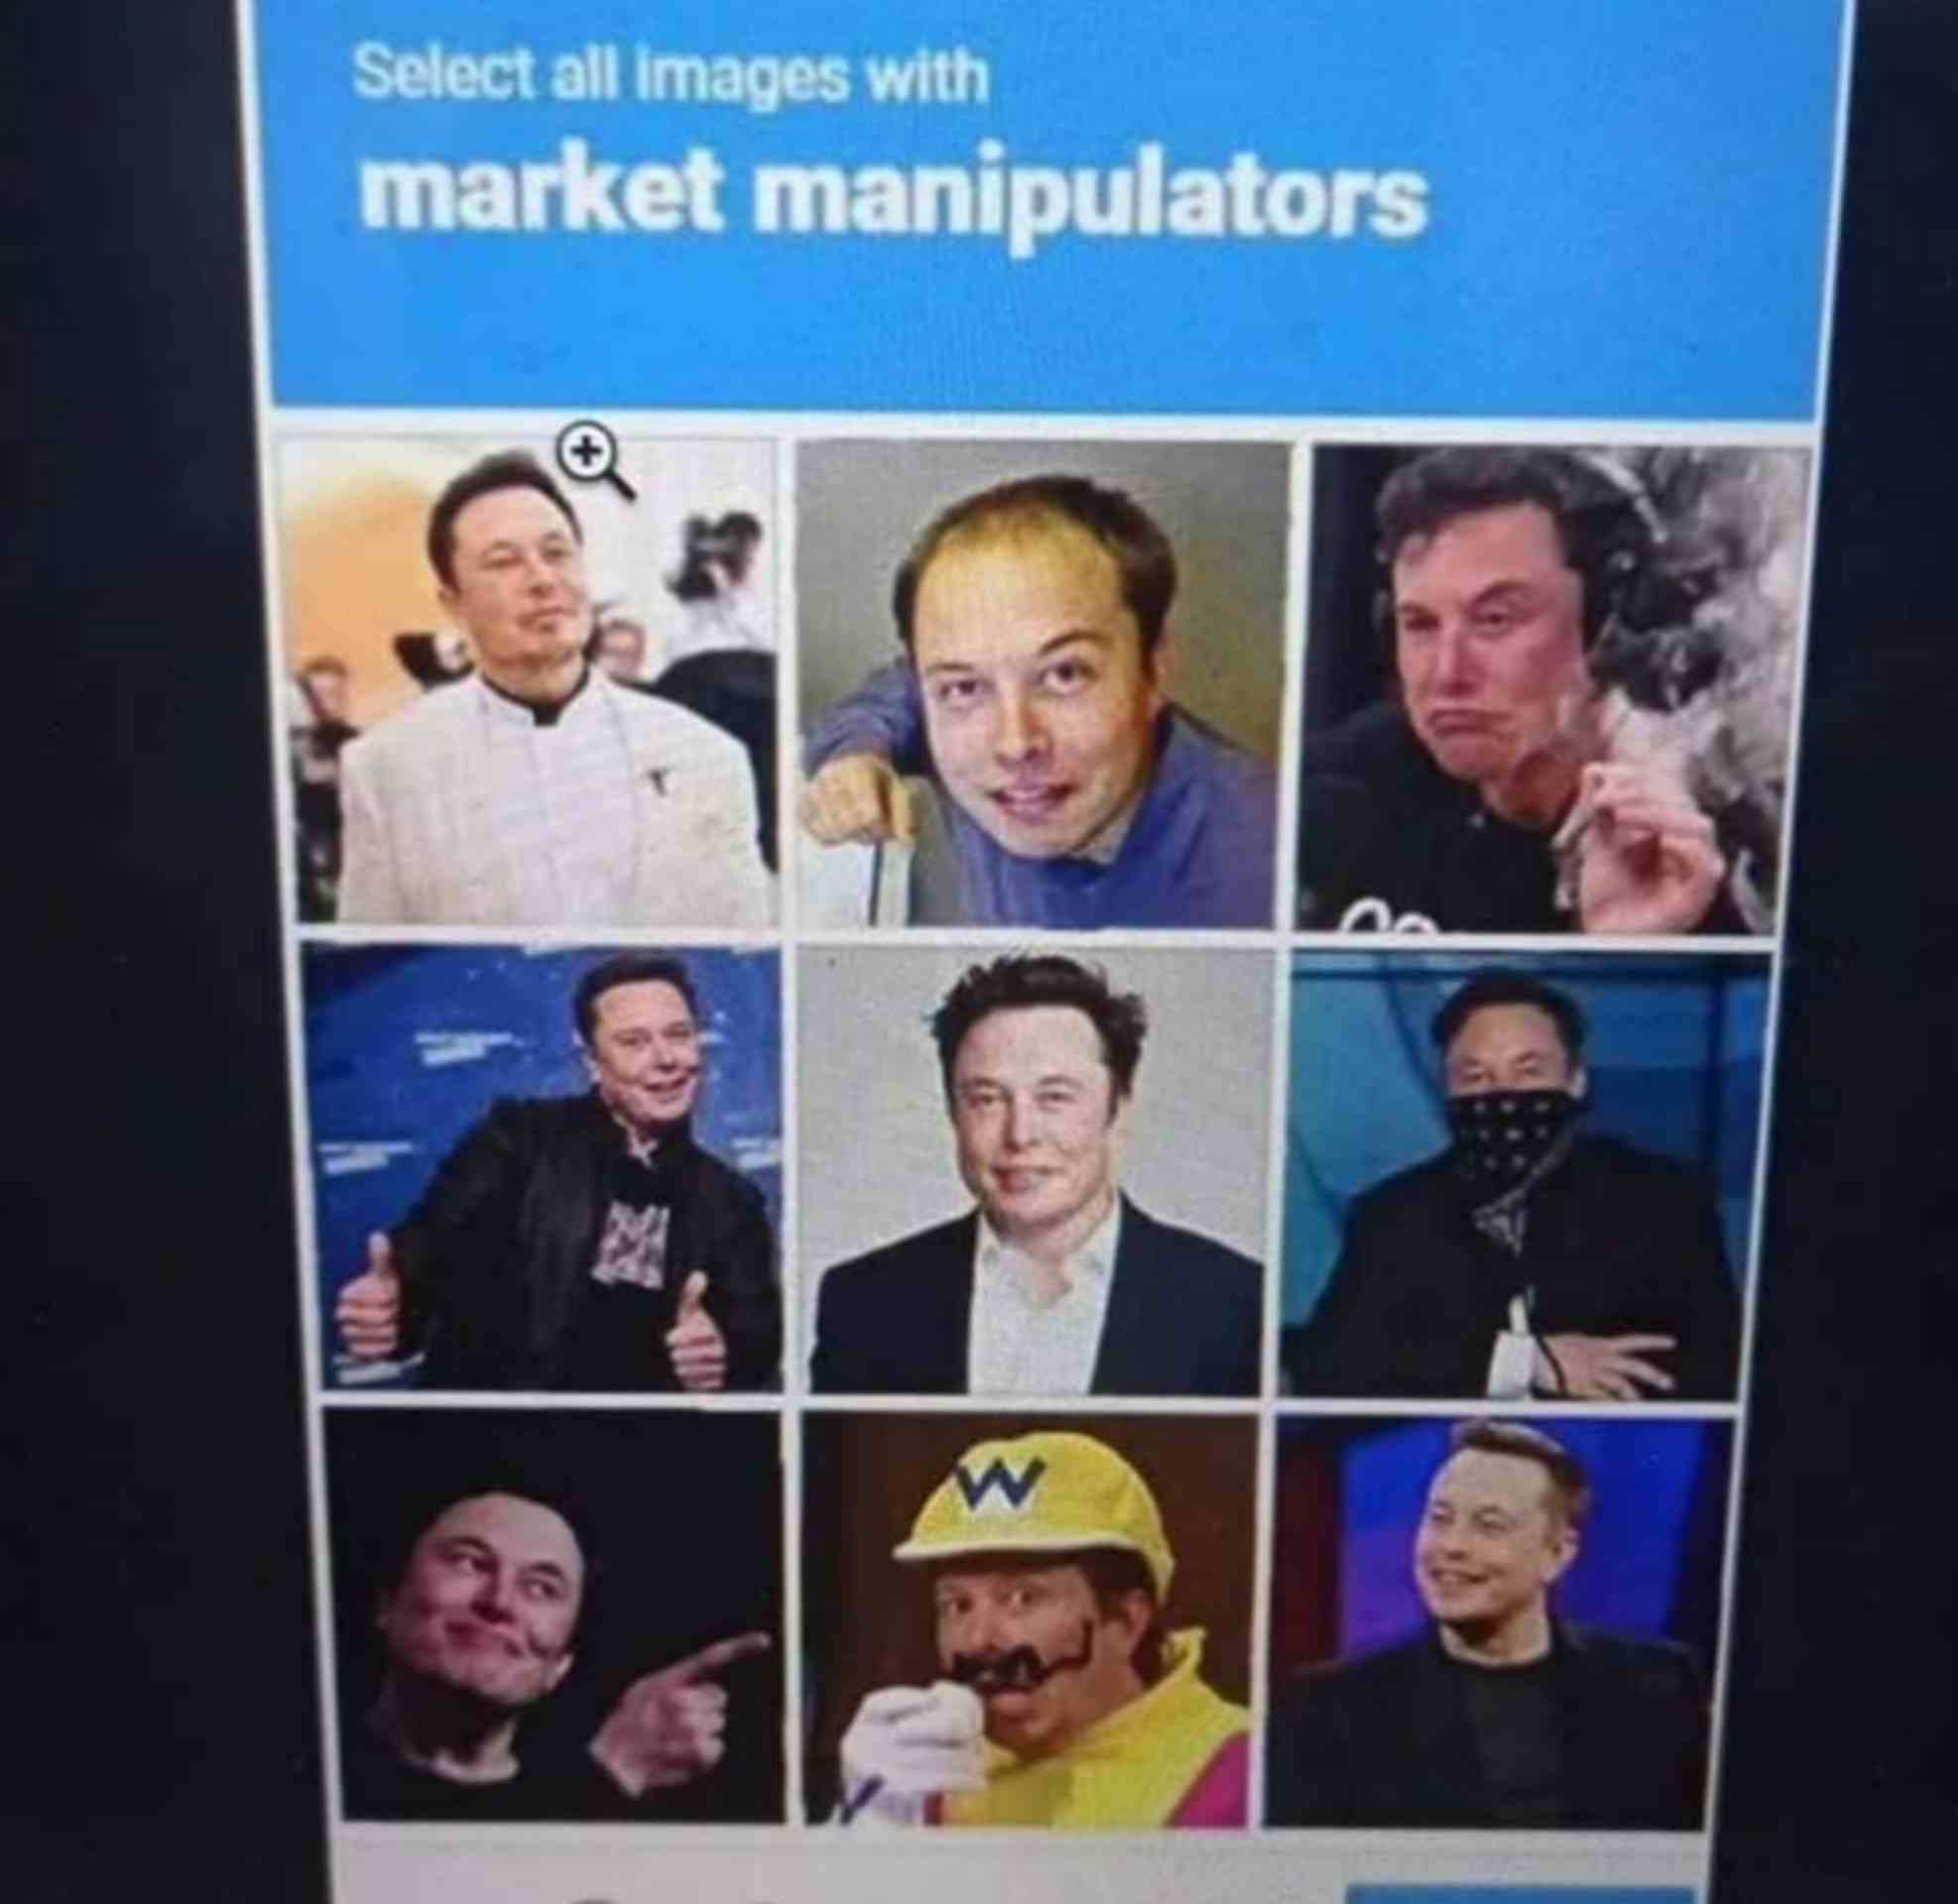 Market manipulators